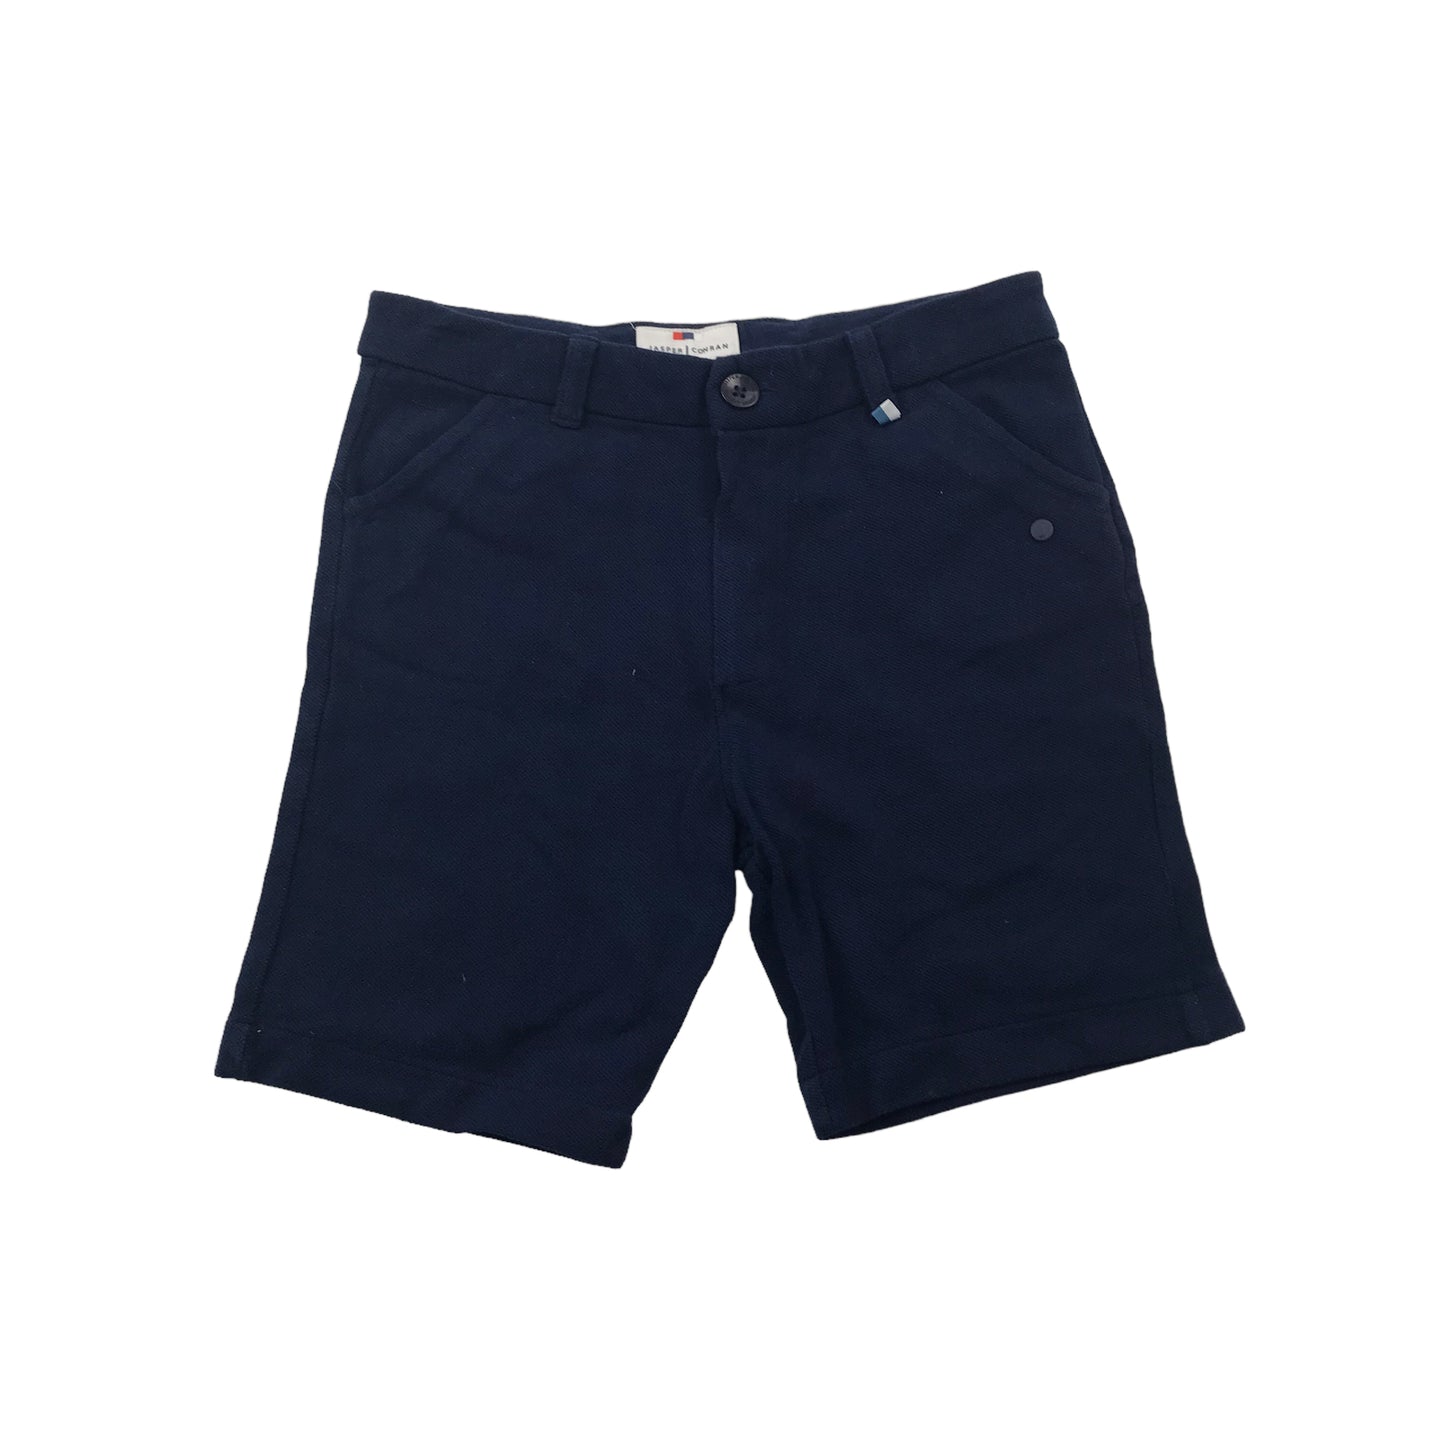 Jasper Conran Navy Blue Chino Style Shorts Age 9